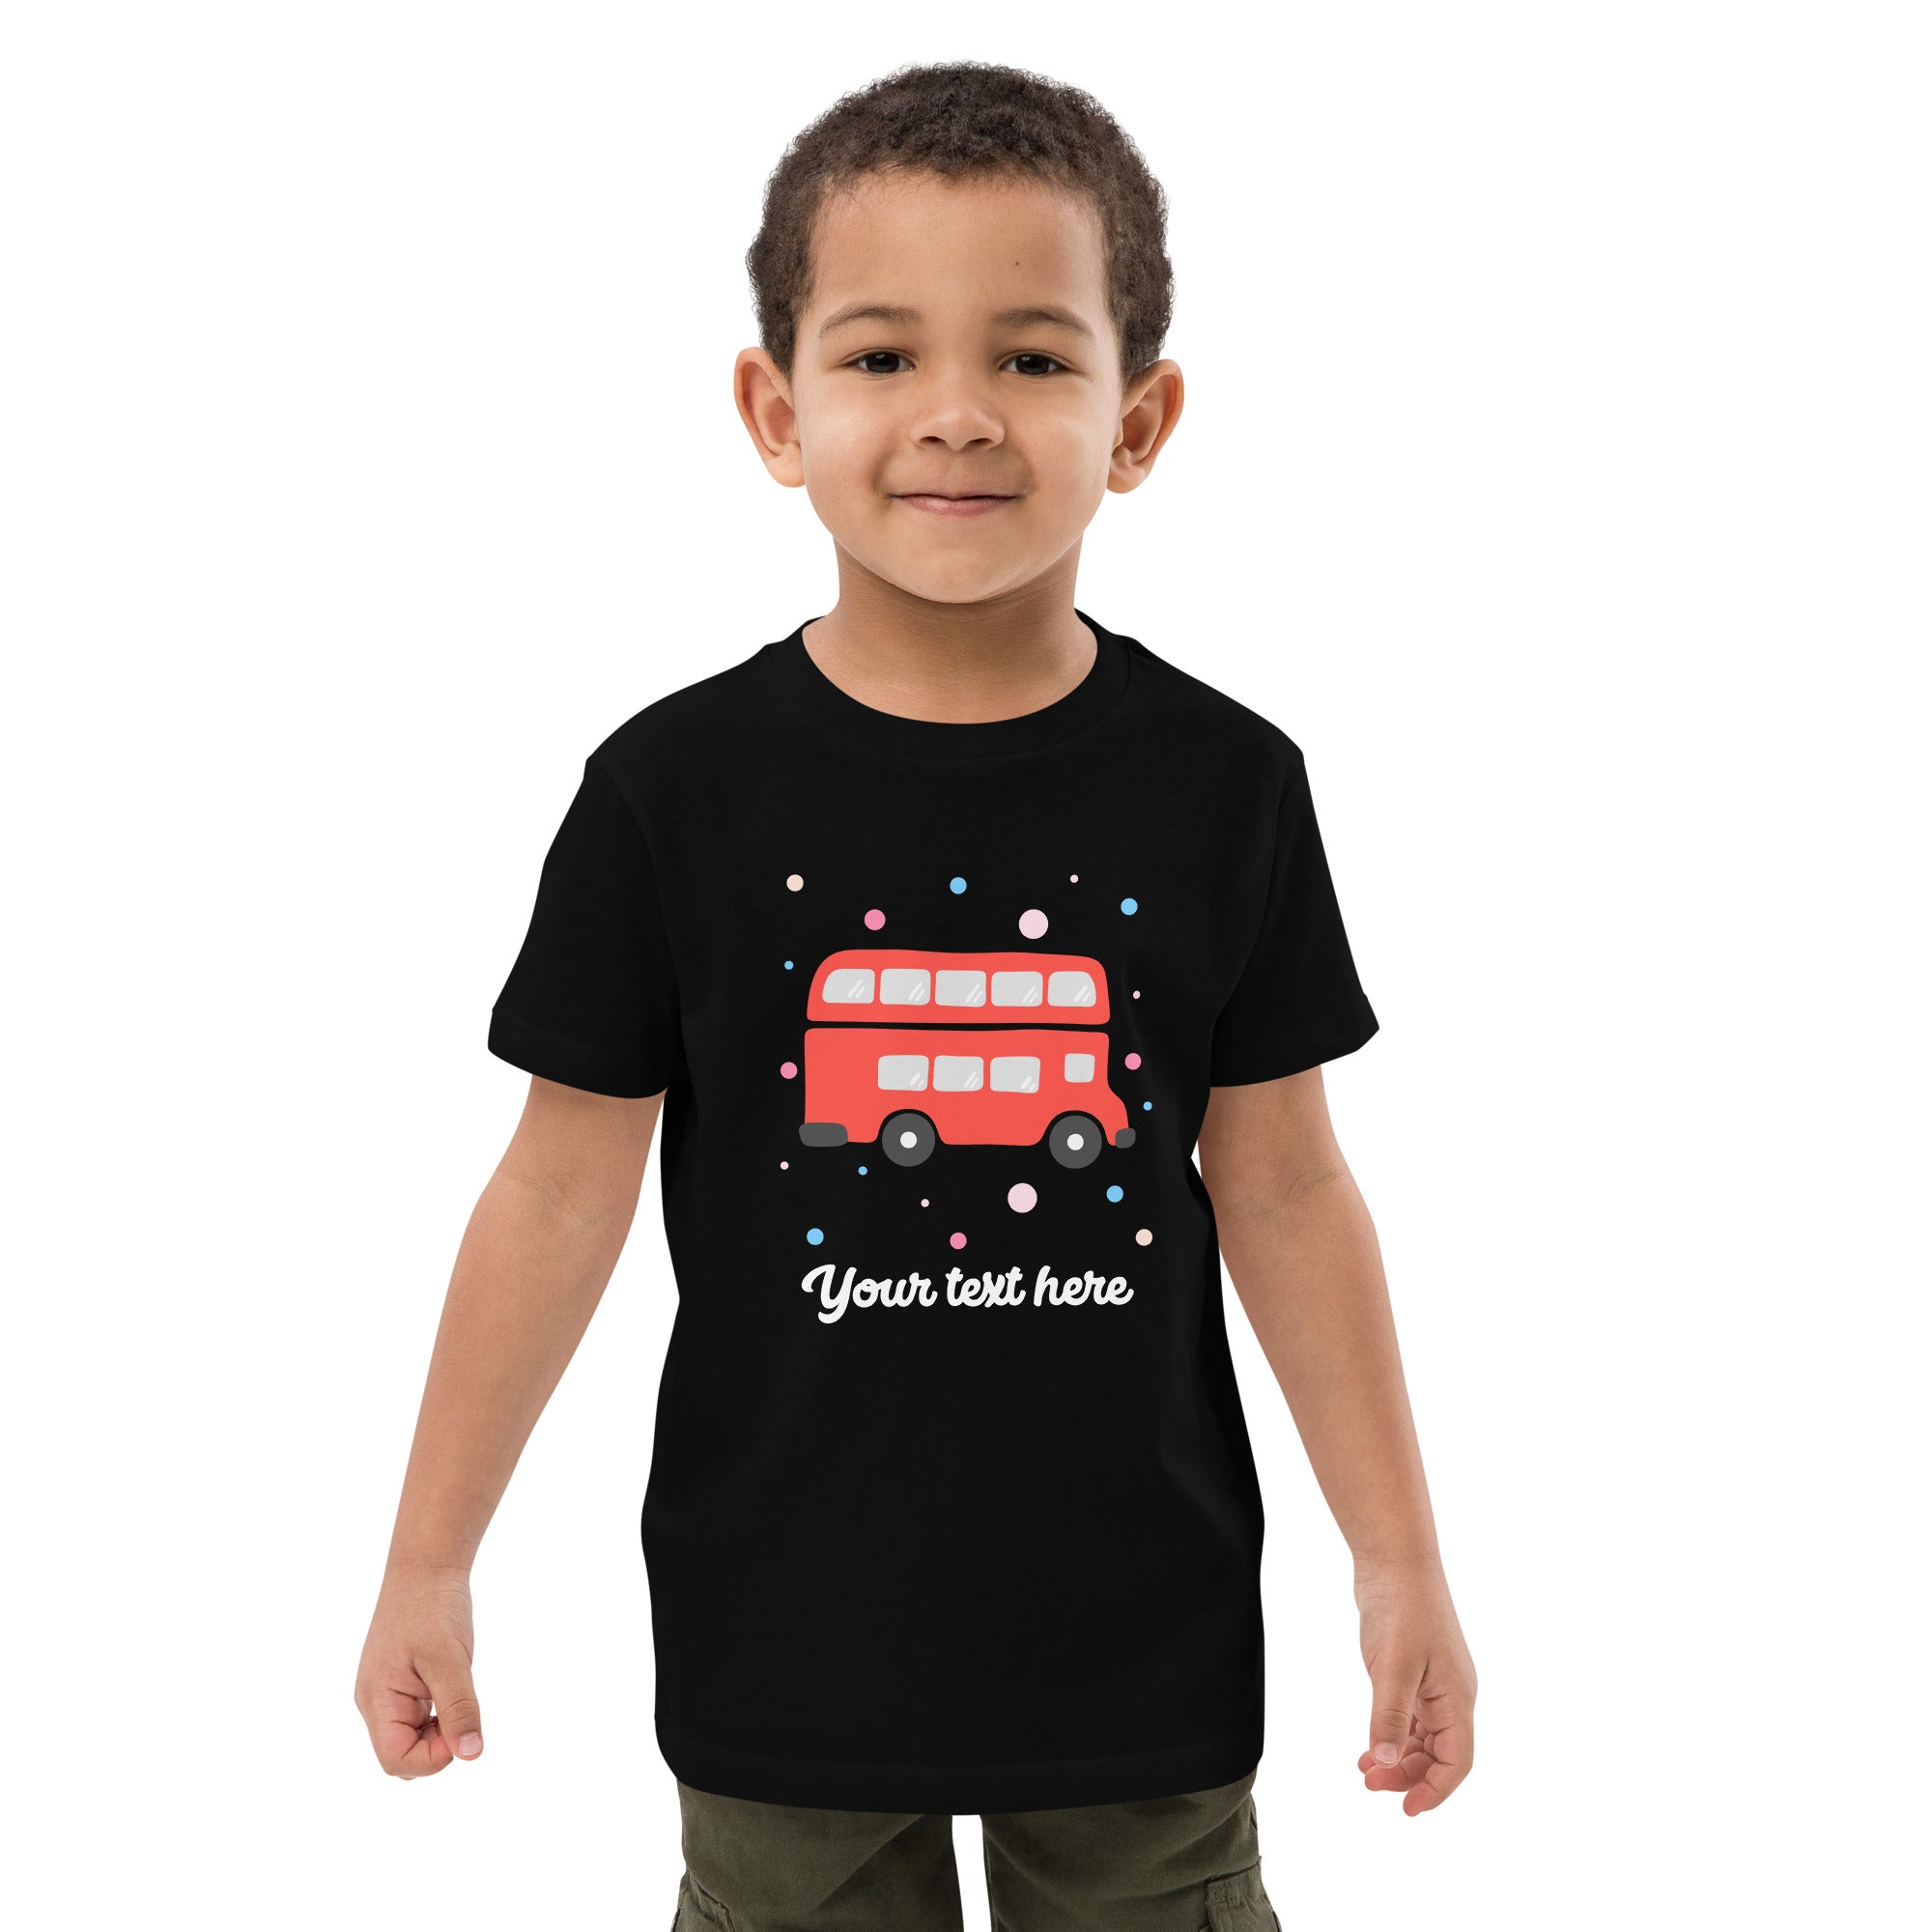 Personalised Custom Text - Organic Cotton Kids T-Shirt - London Doodles - Red Bus - Black 2